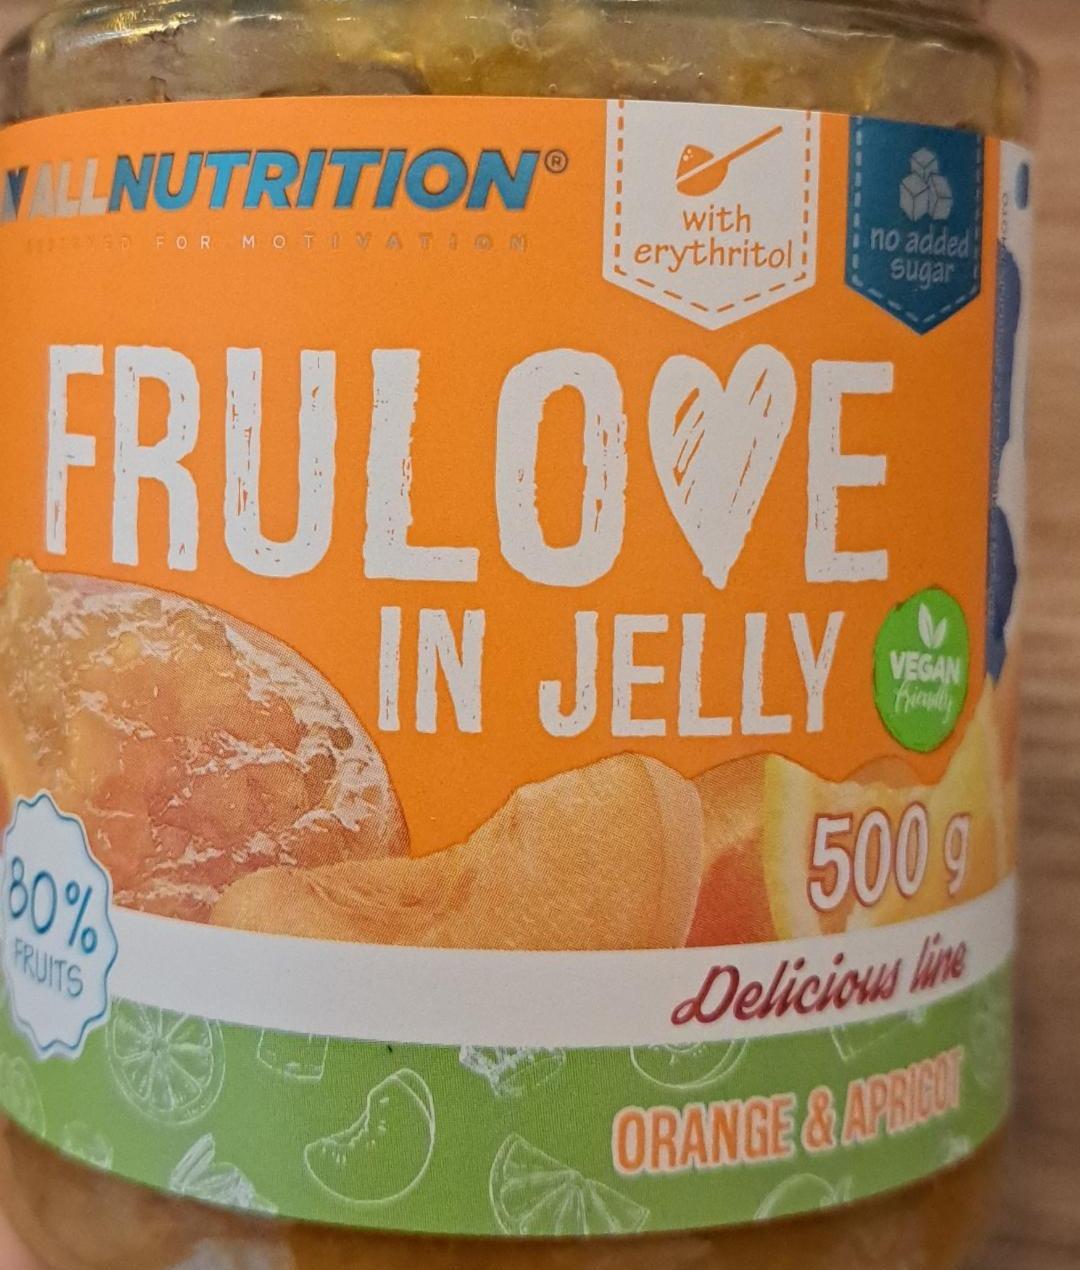 Fotografie - Frulove in jelly Orange & Apricot Allnutrition